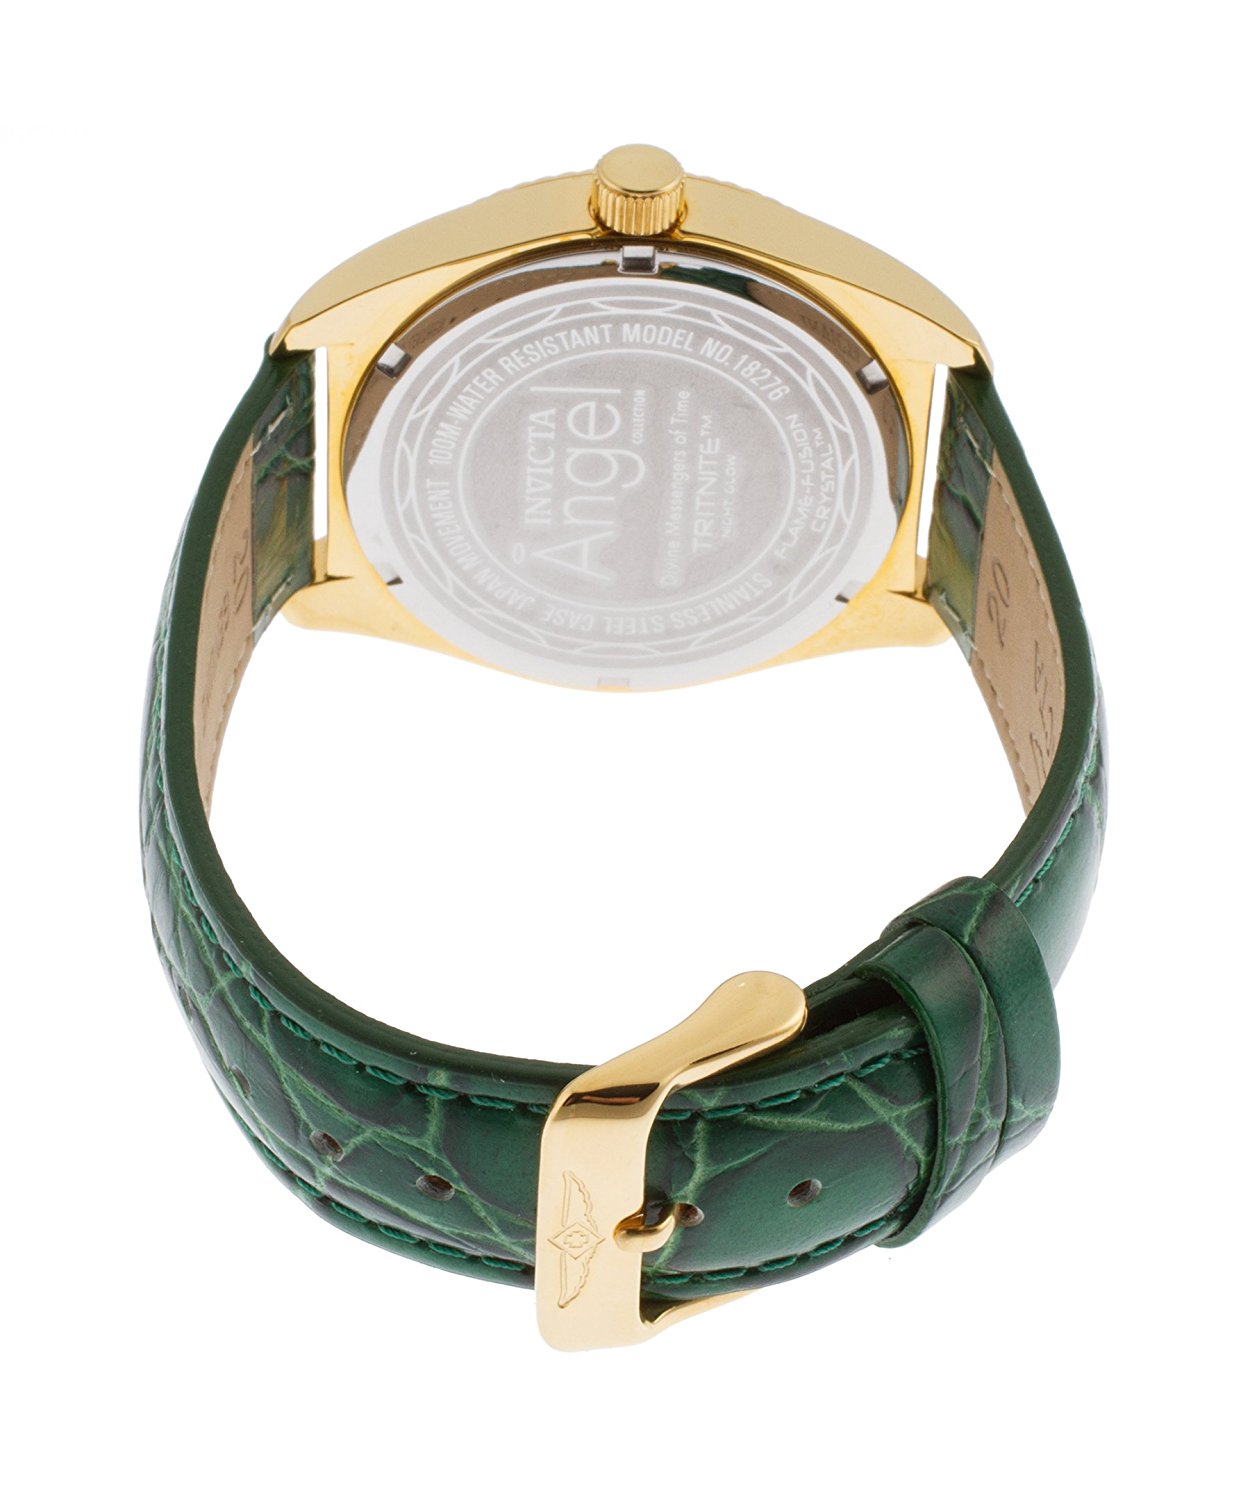 Invicta Angel Quartz Analog Day Date Green Leather Watch # 18276 (Women Watch)